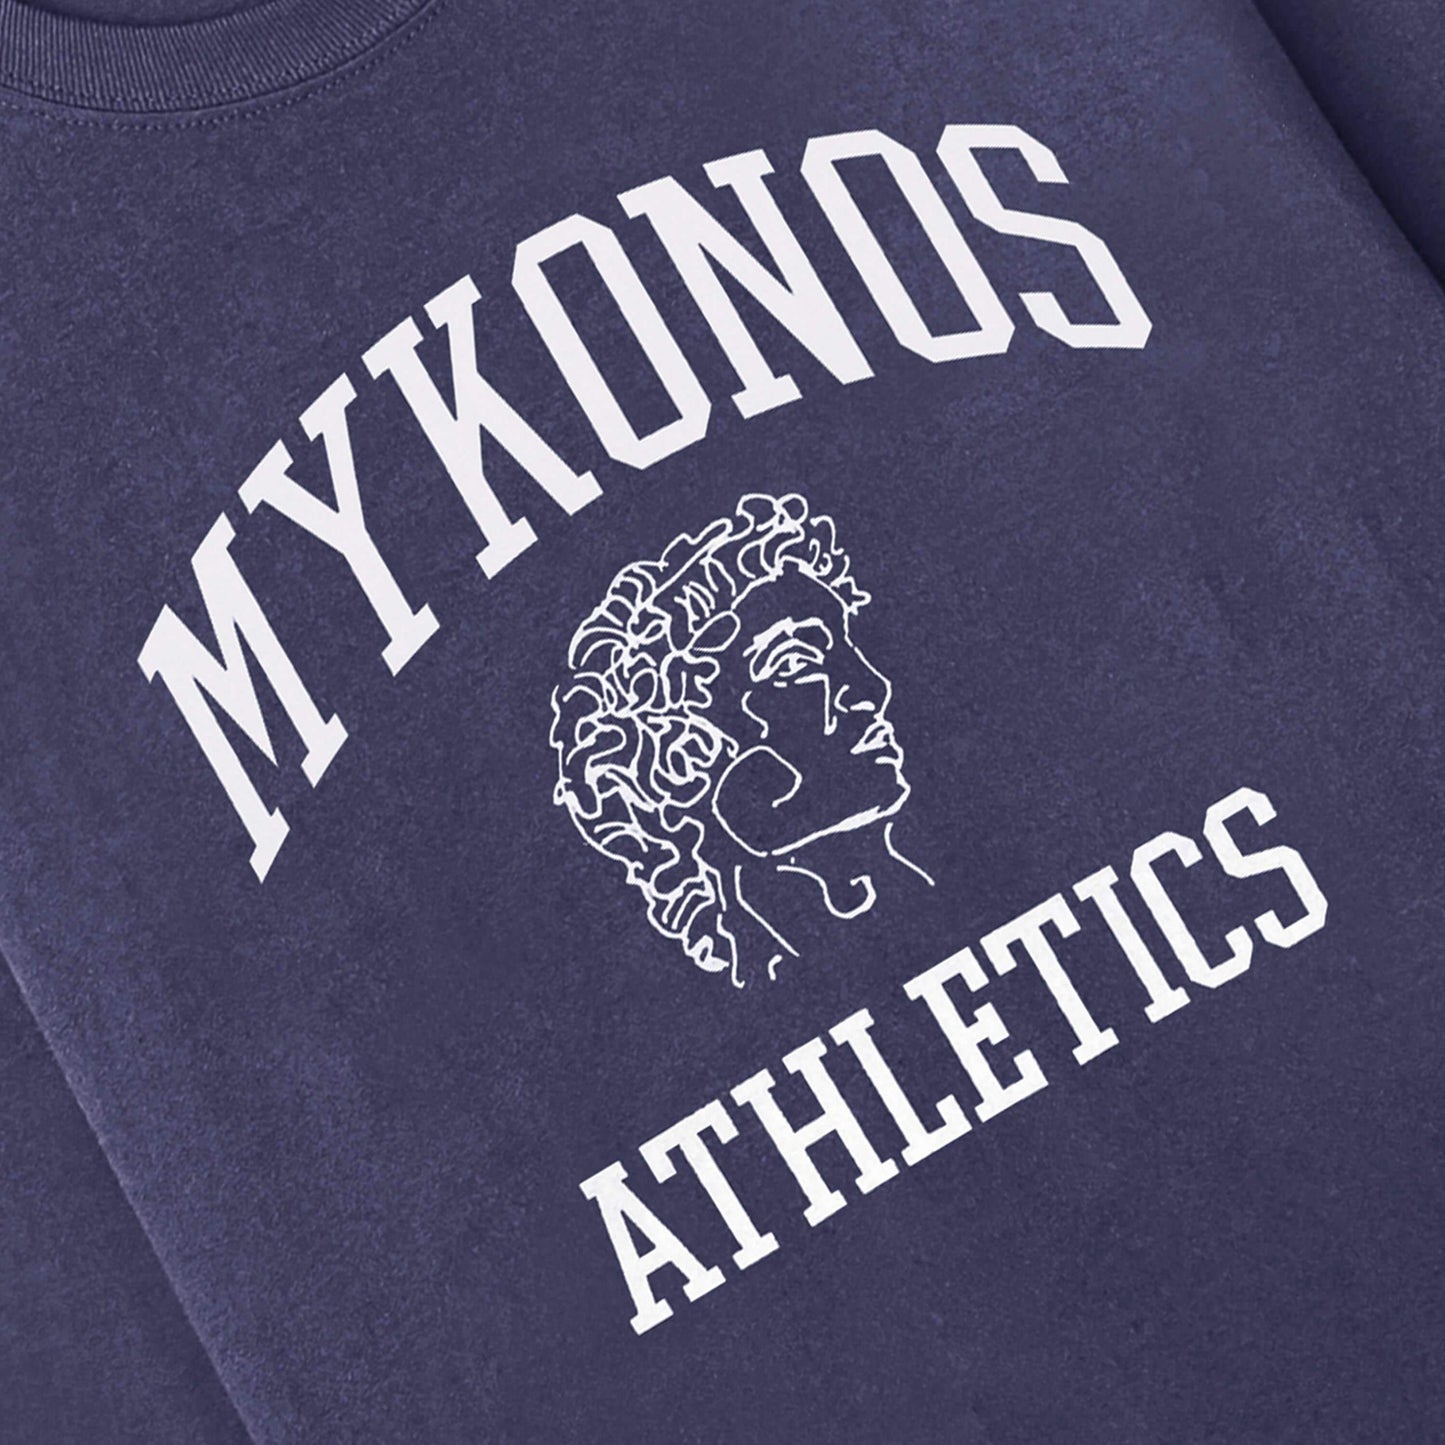 Mykonos Athletics Club Long Sleeve Tee